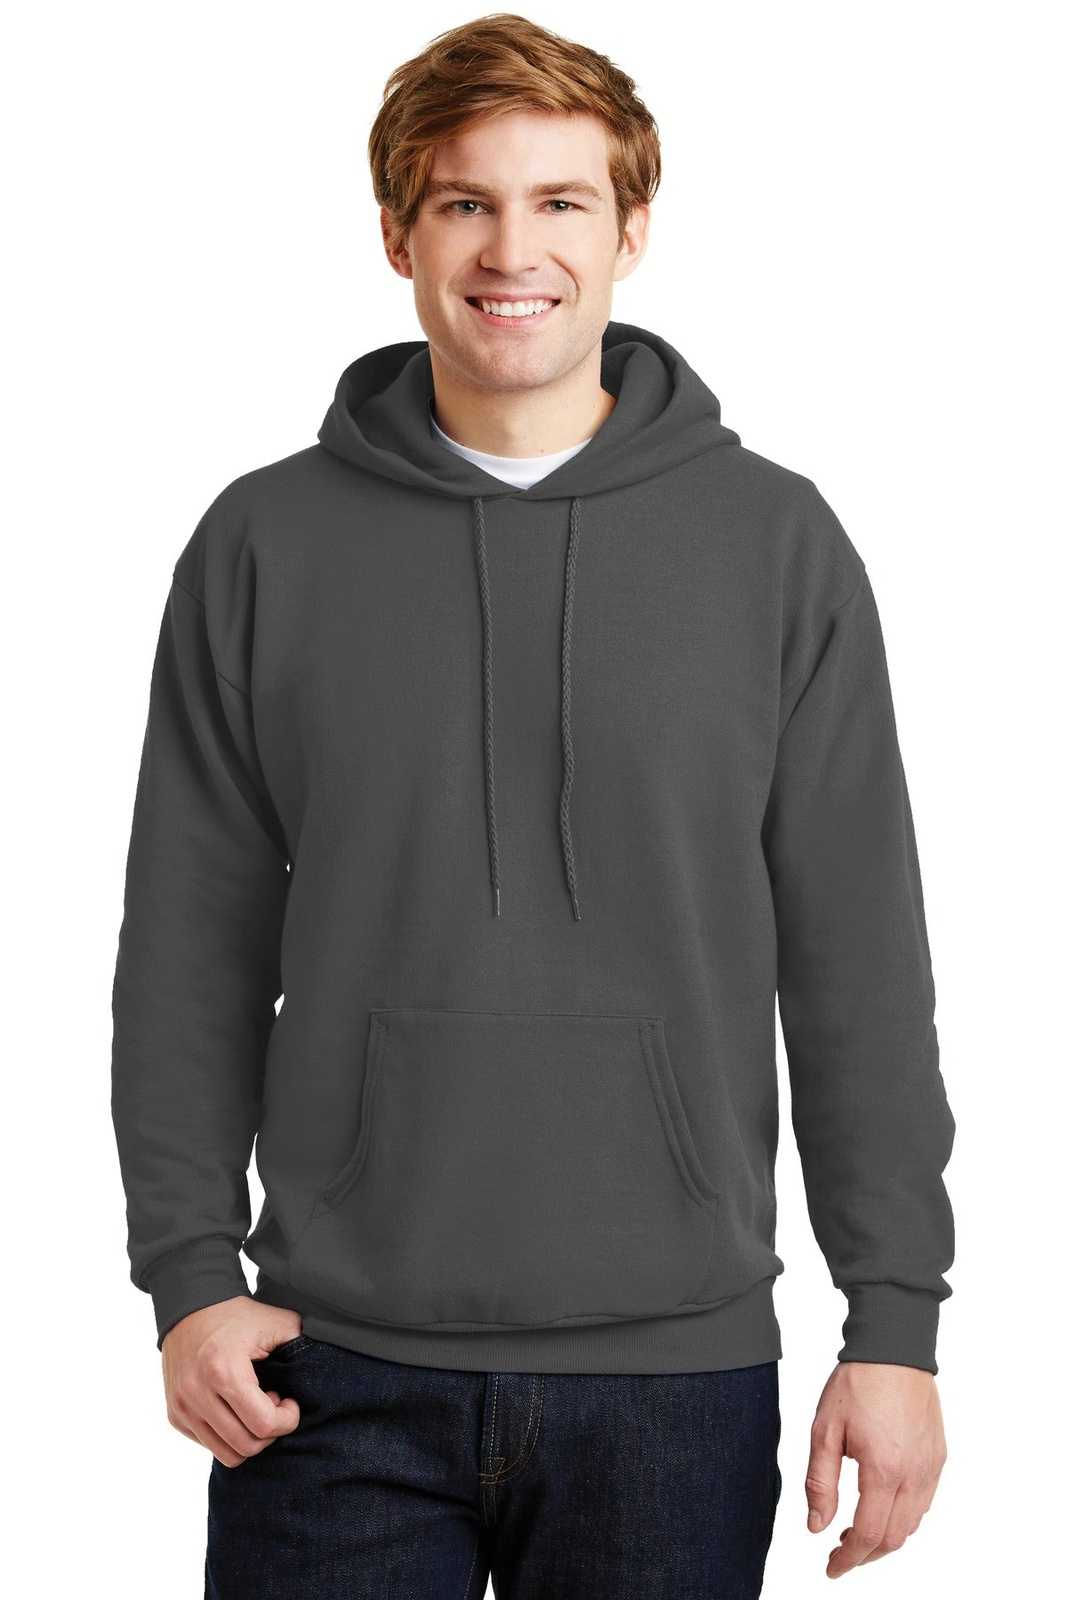 Hanes P170 EcoSmart - Pullover Hooded Sweatshirt - Smoke Gray - HIT a Double